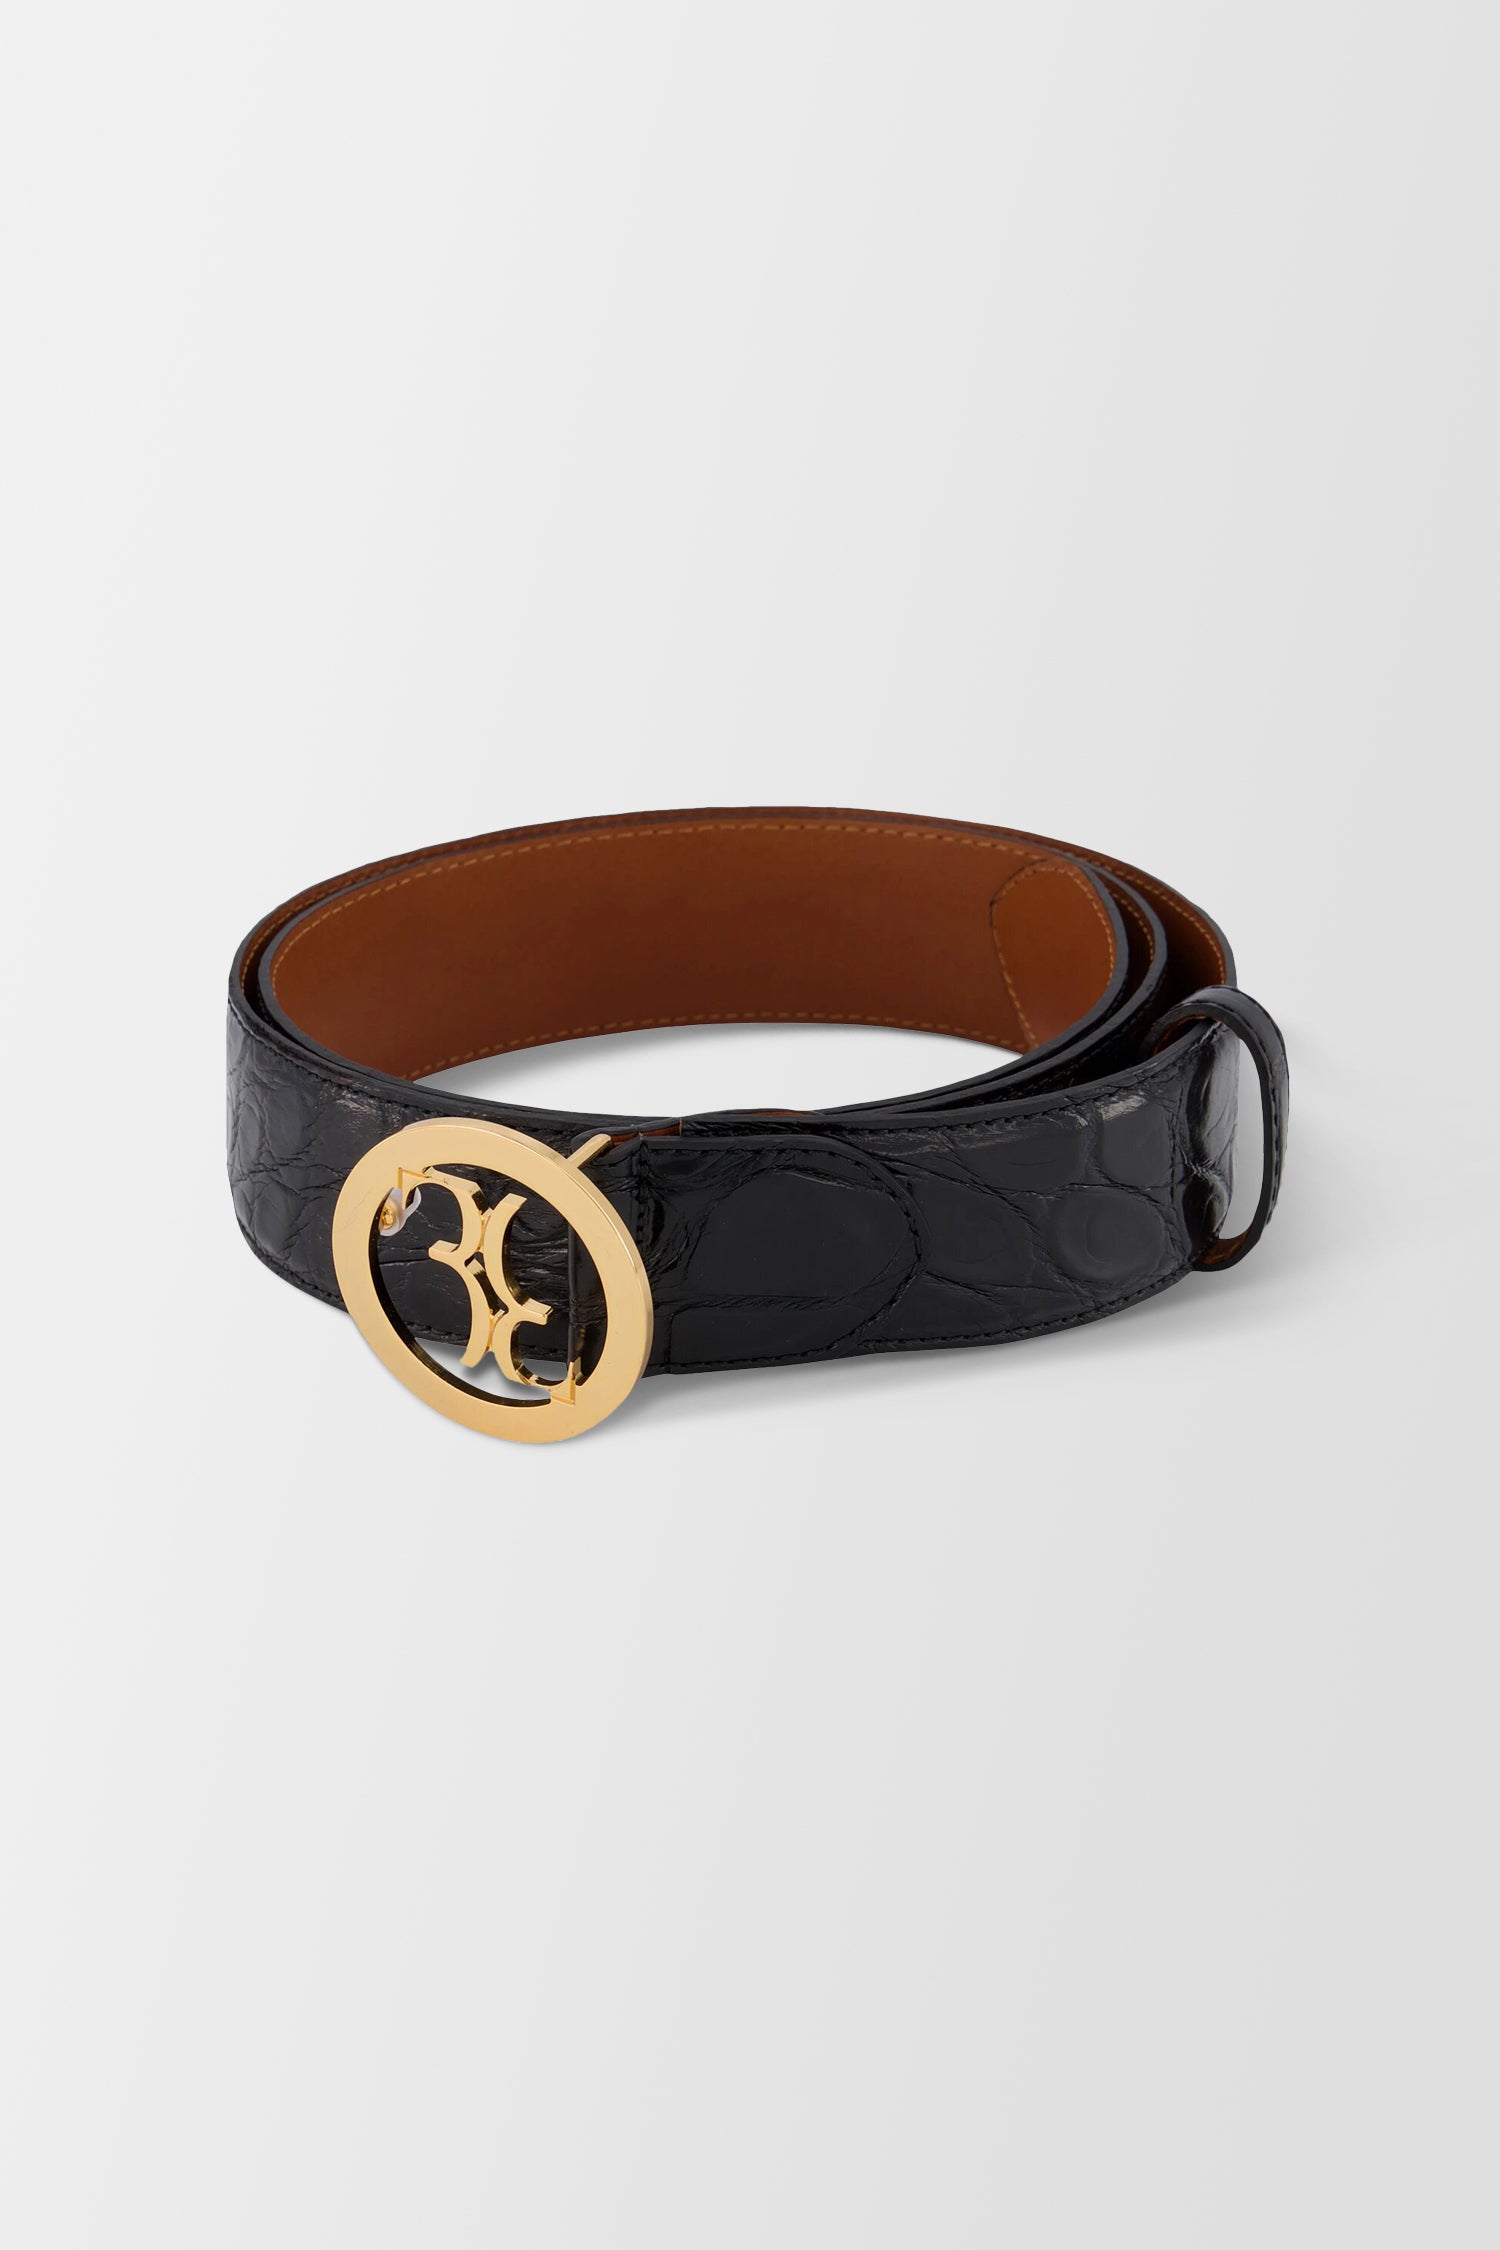 Billionaire Black/Gold Luxury Belt